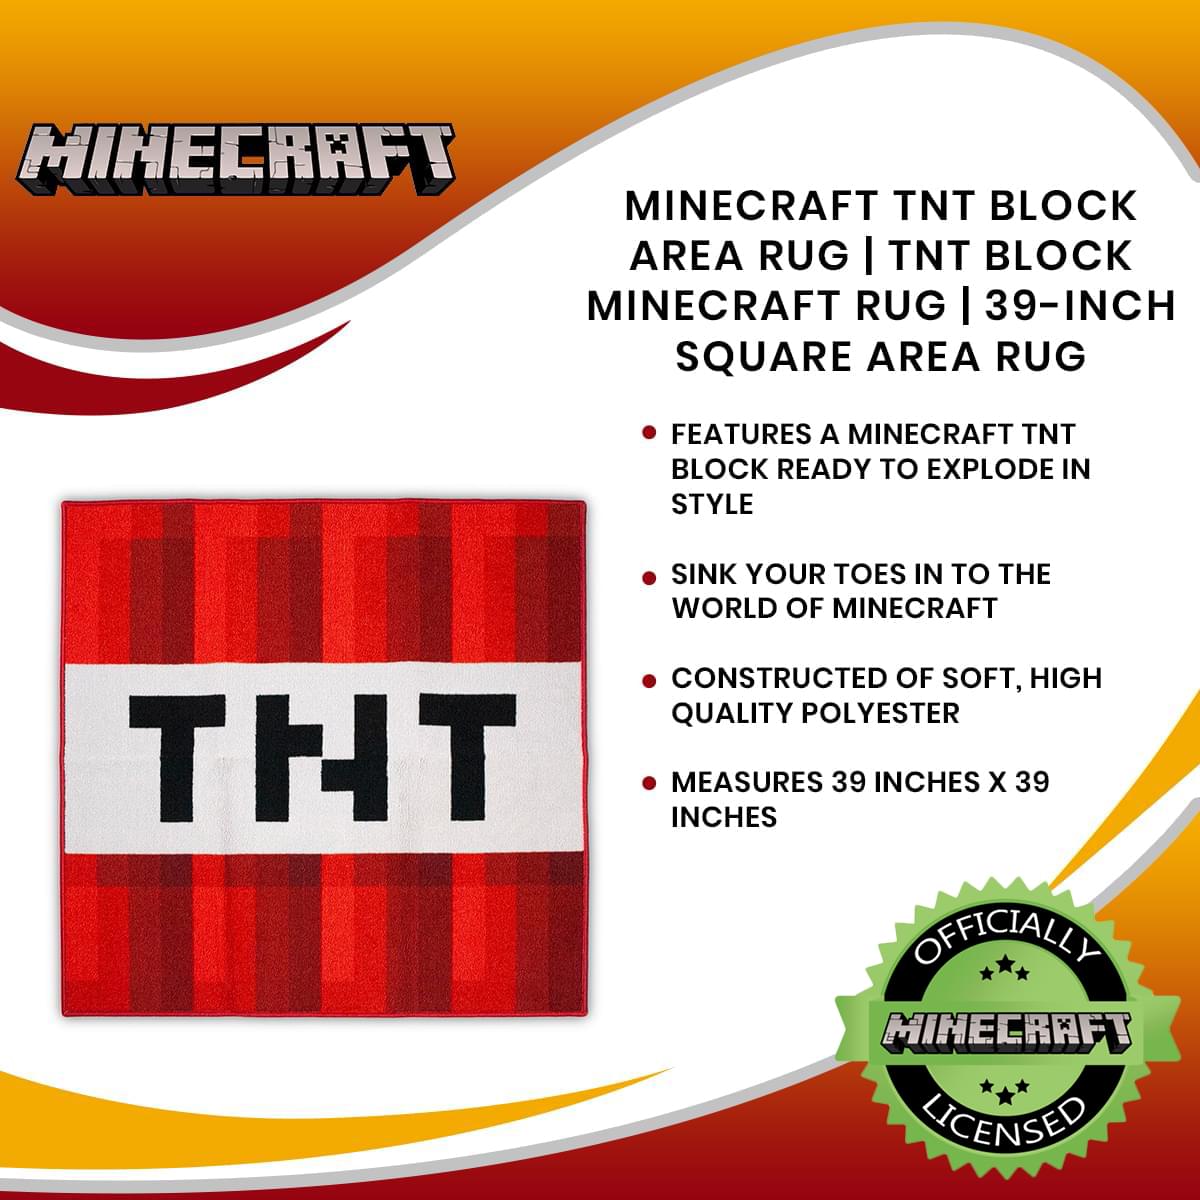 Minecraft TNT Block Area Rug | TNT Block Minecraft Rug | 39-Inch Square Area Rug